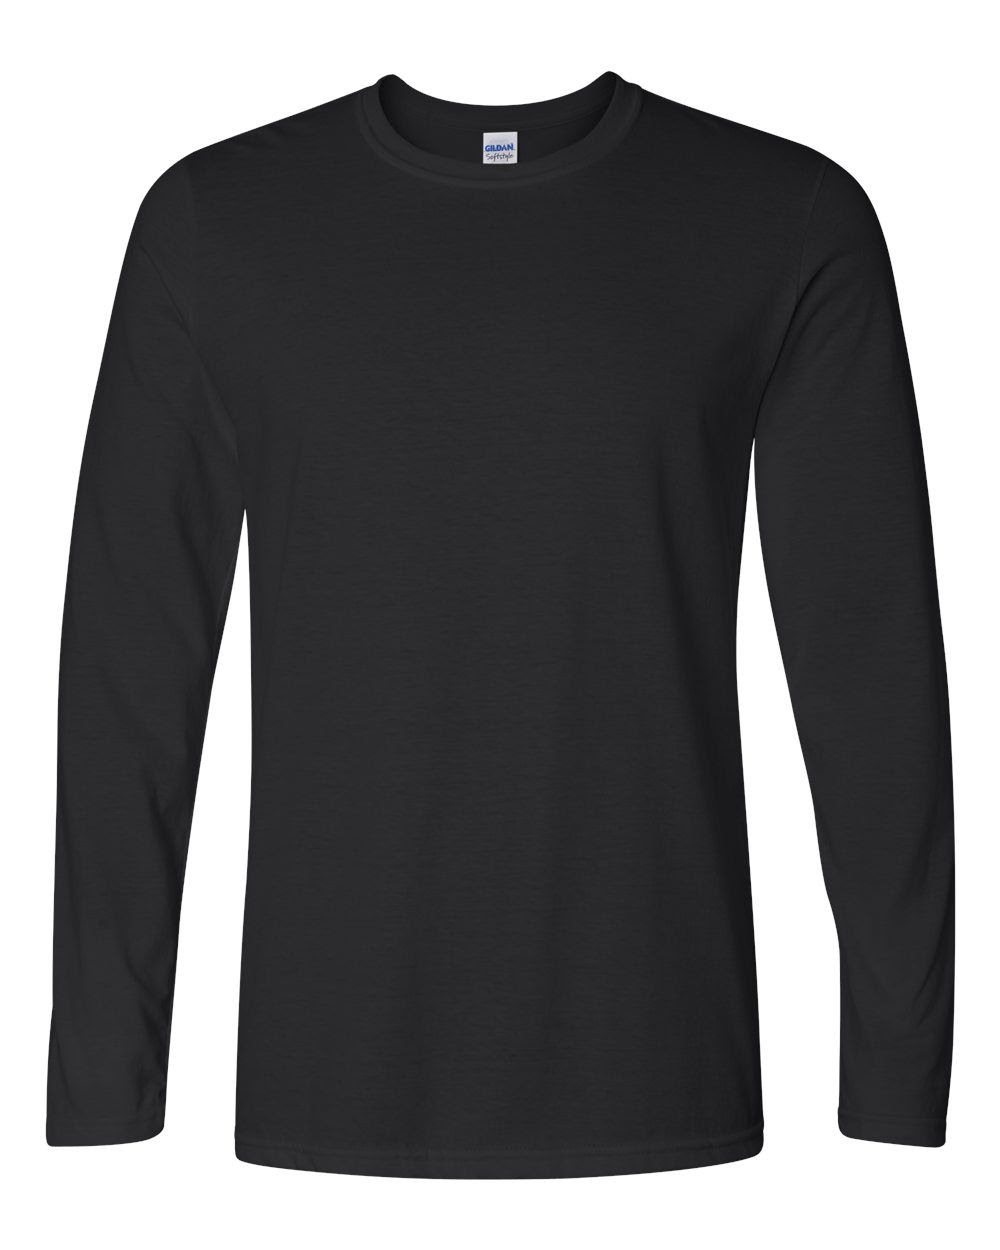 11478+ Black Long Sleeve T Shirt Template Packaging Mockups PSD